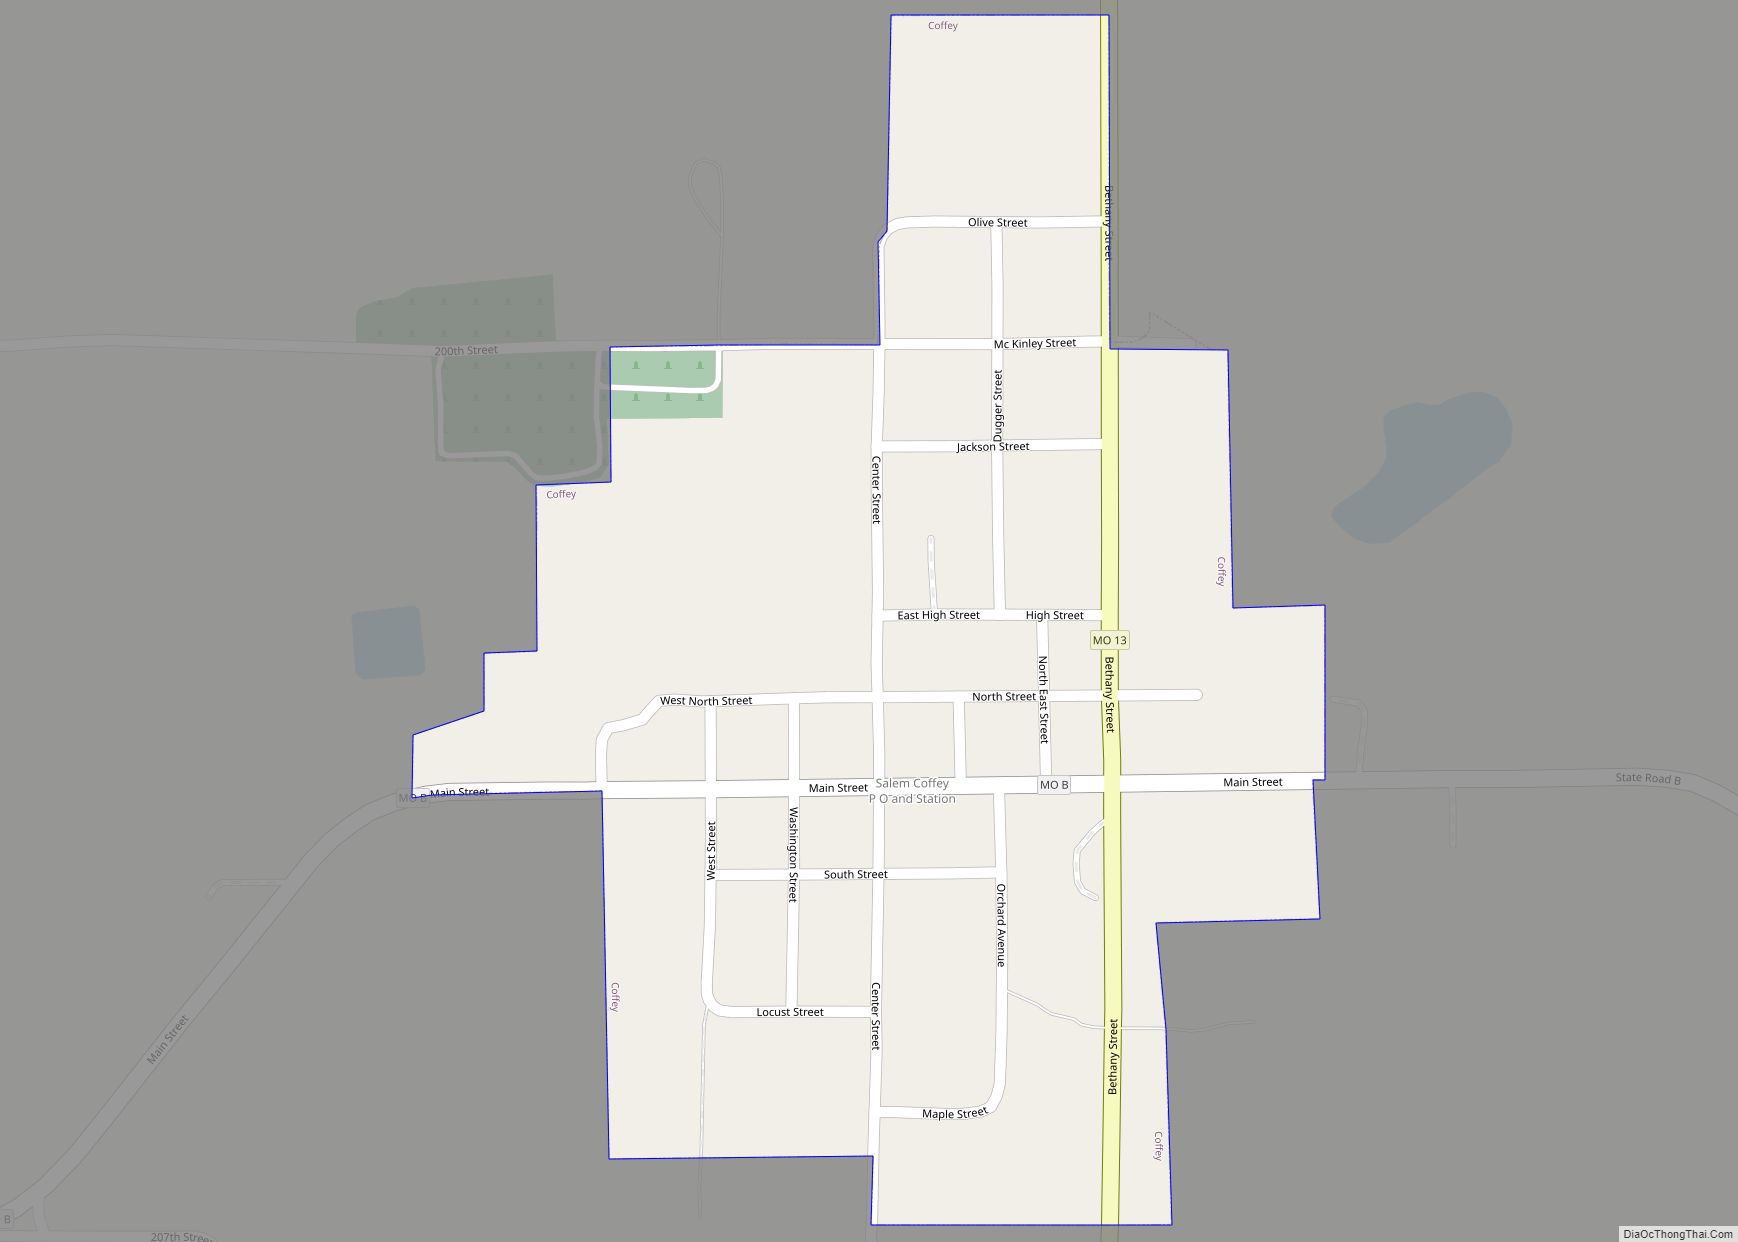 Map of Coffey city